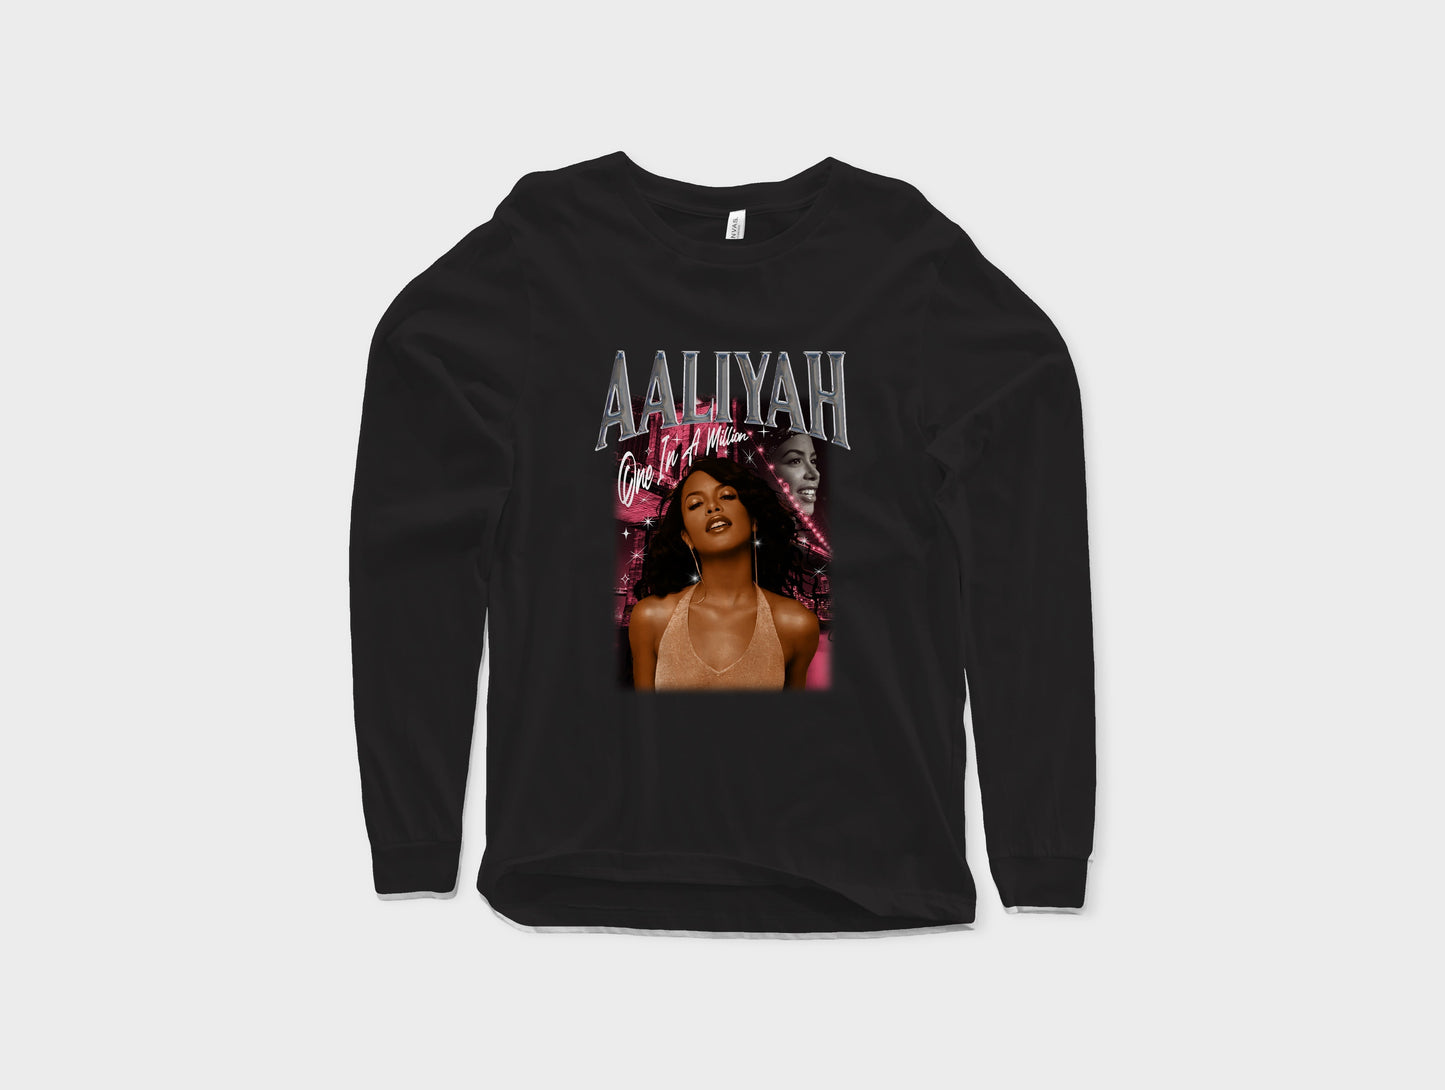 Aaliyah "One In A Million" (Long sleeves)-DaPrintFactory